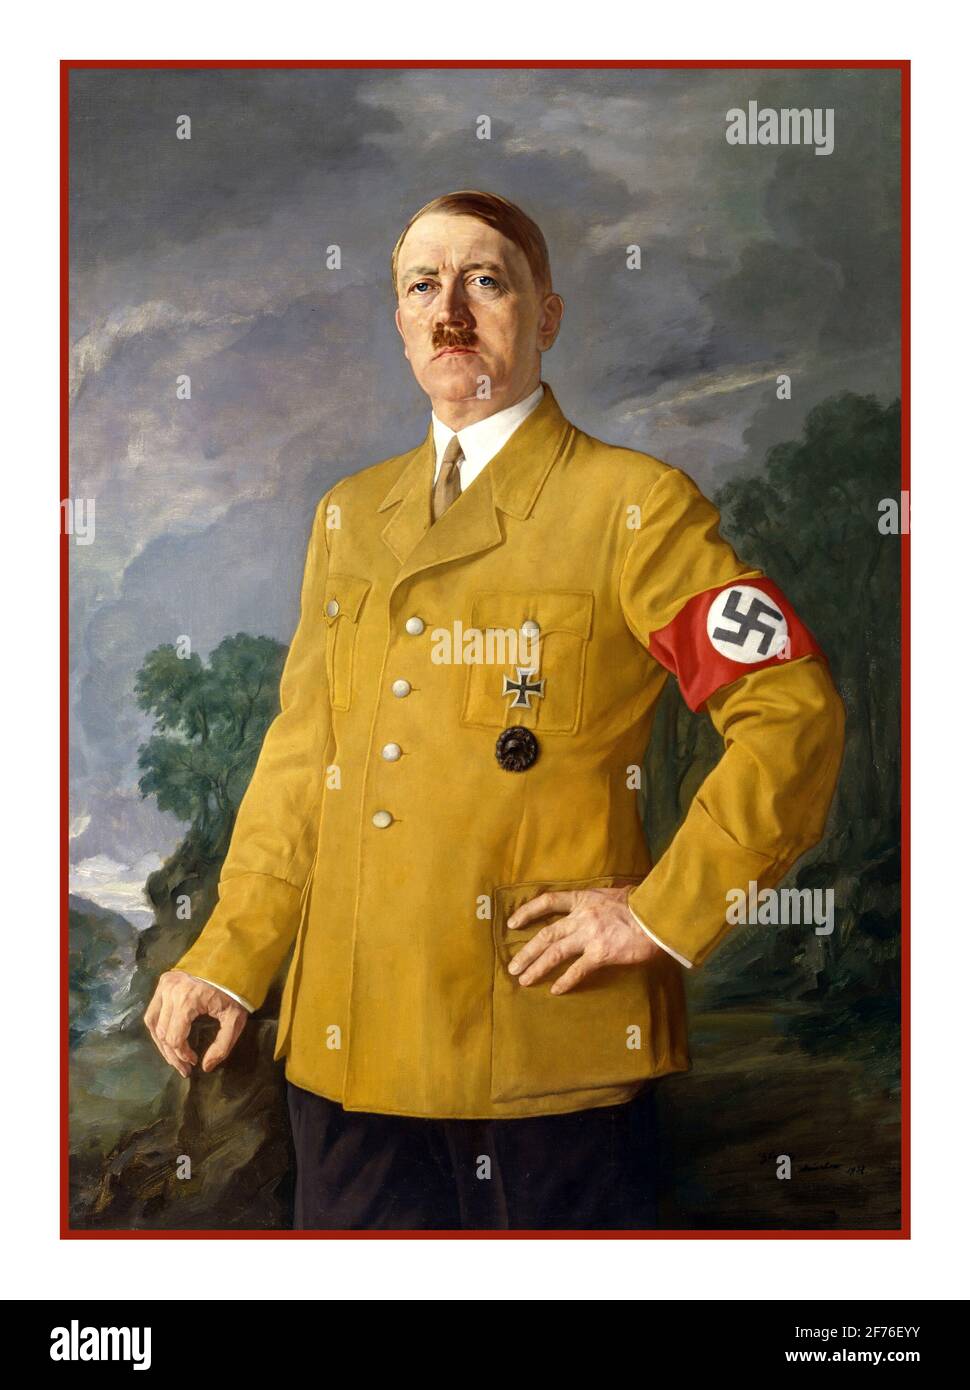 Adolf Hitler OIL PAINTING Der Führer Gemälde Adolf Hitler Portrait painting of Adolf Hitler in uniform with swastika armband by Heinrich Knirr Austrian born German painter 1937 Stock Photo